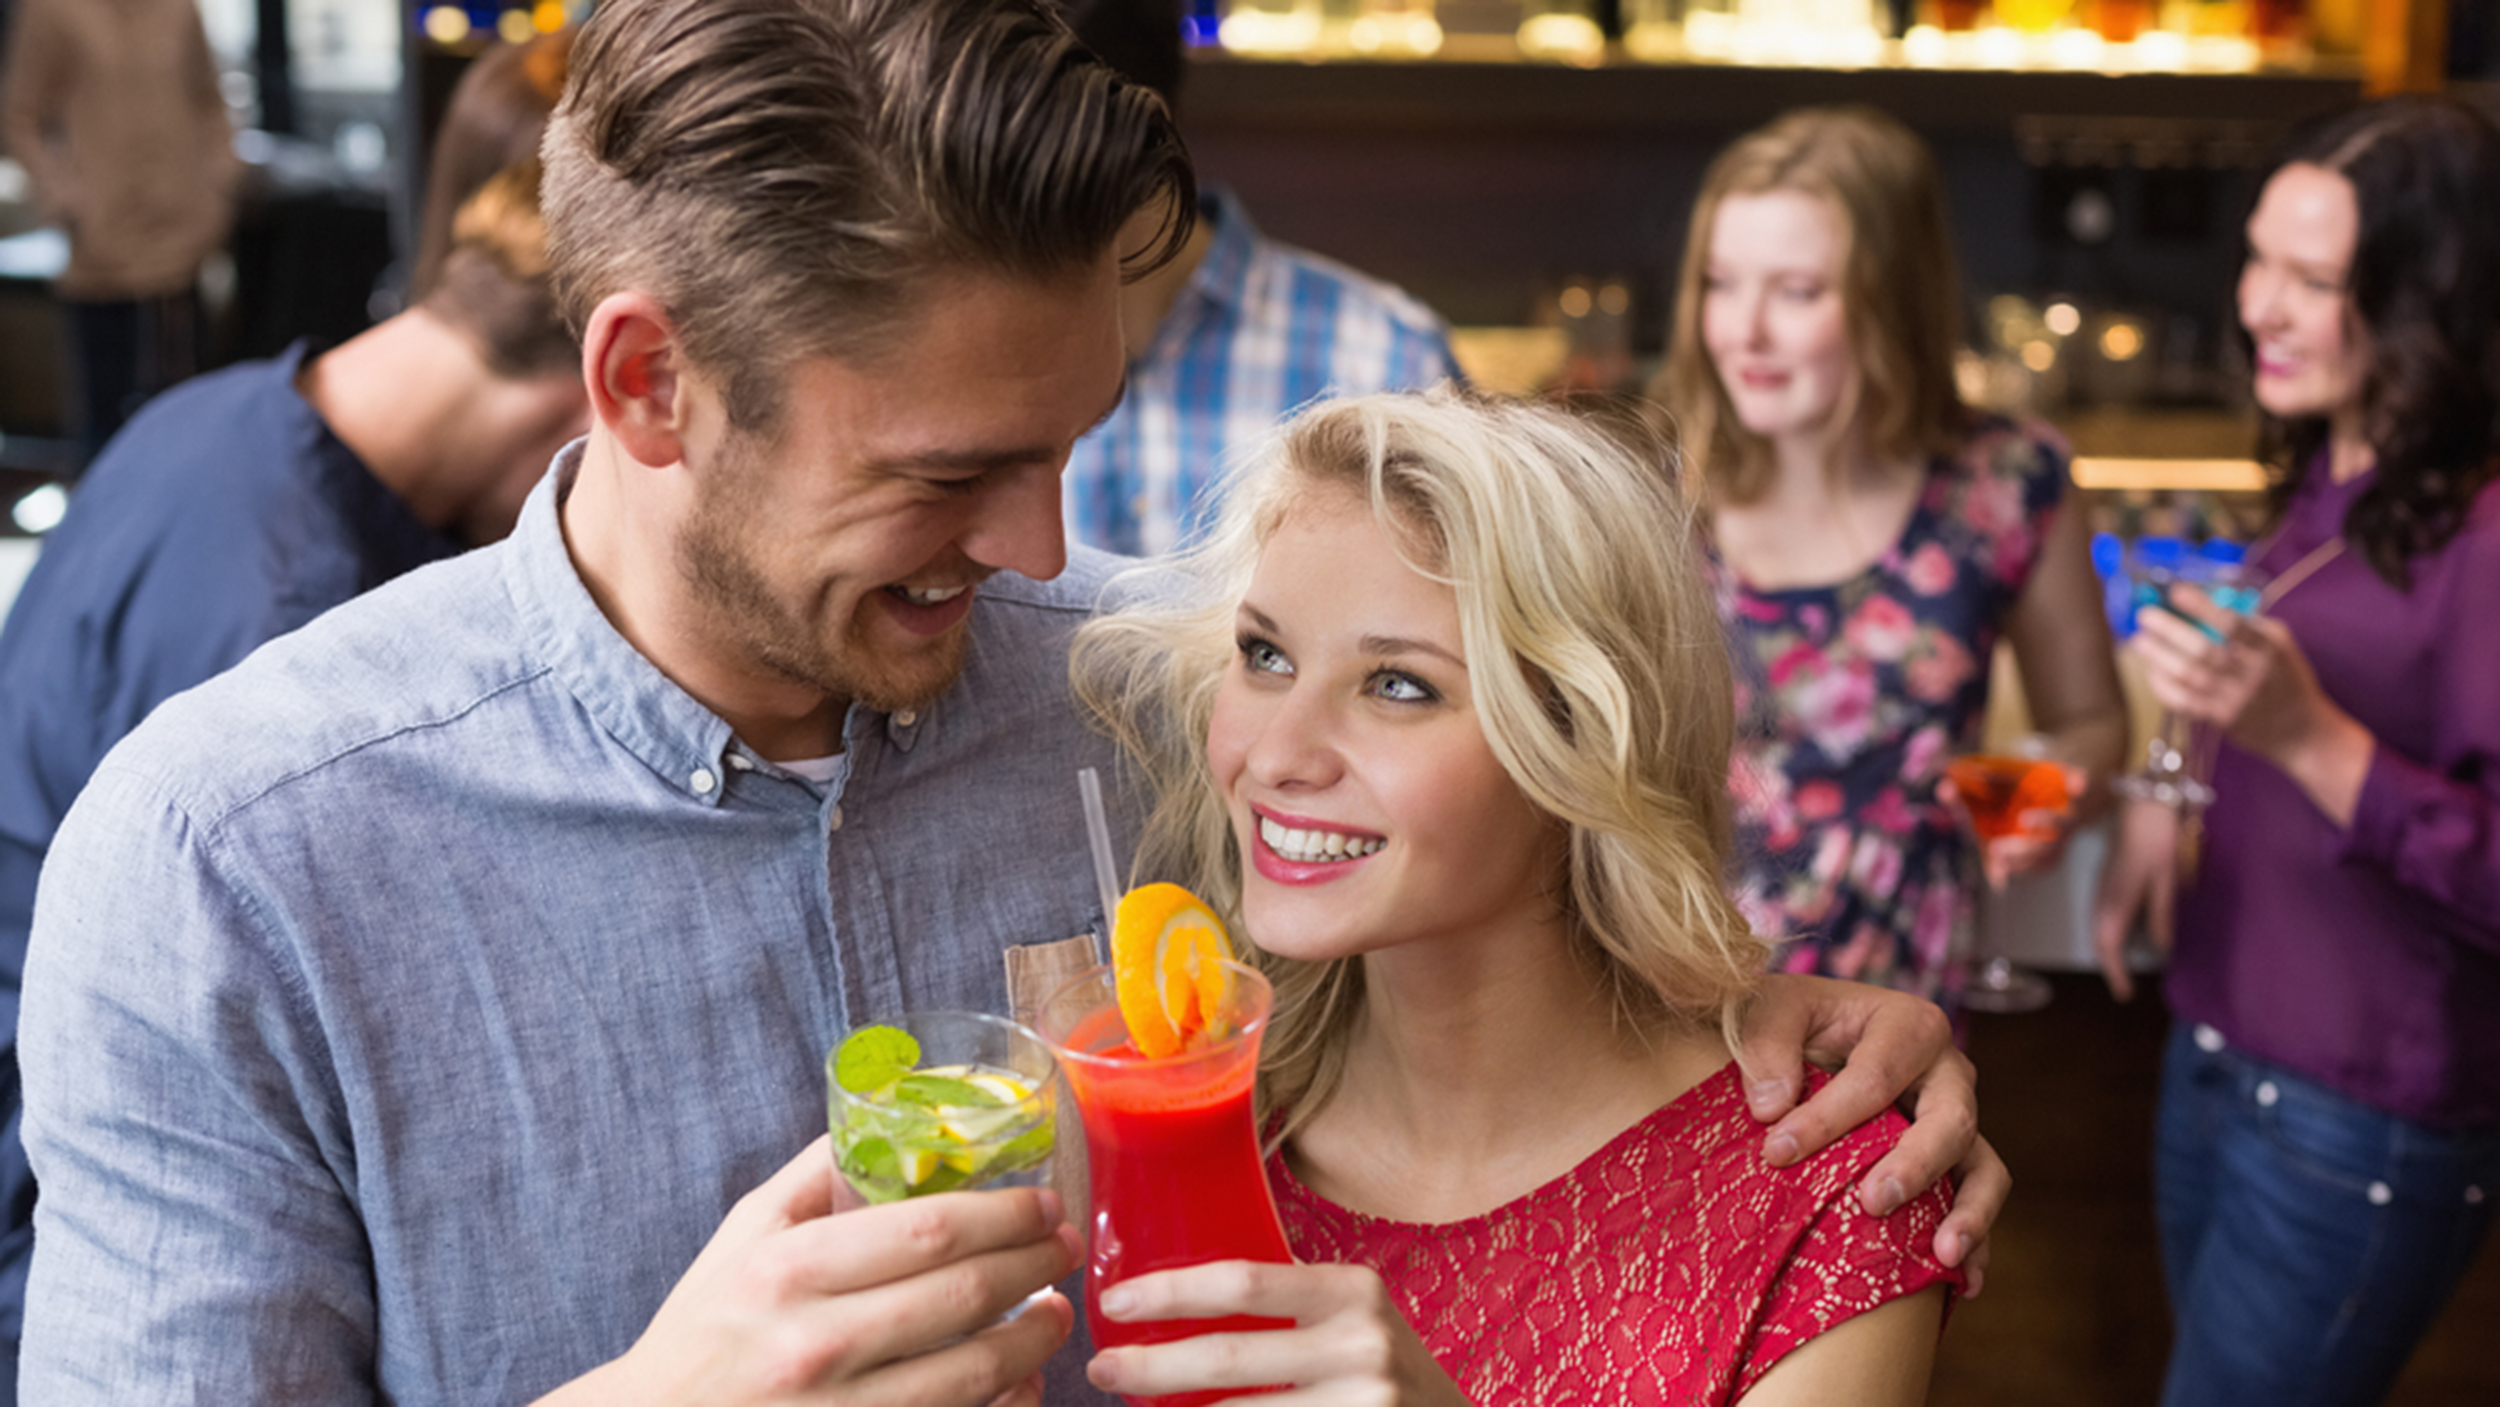 Best Drunken Decisions - drinks on first date